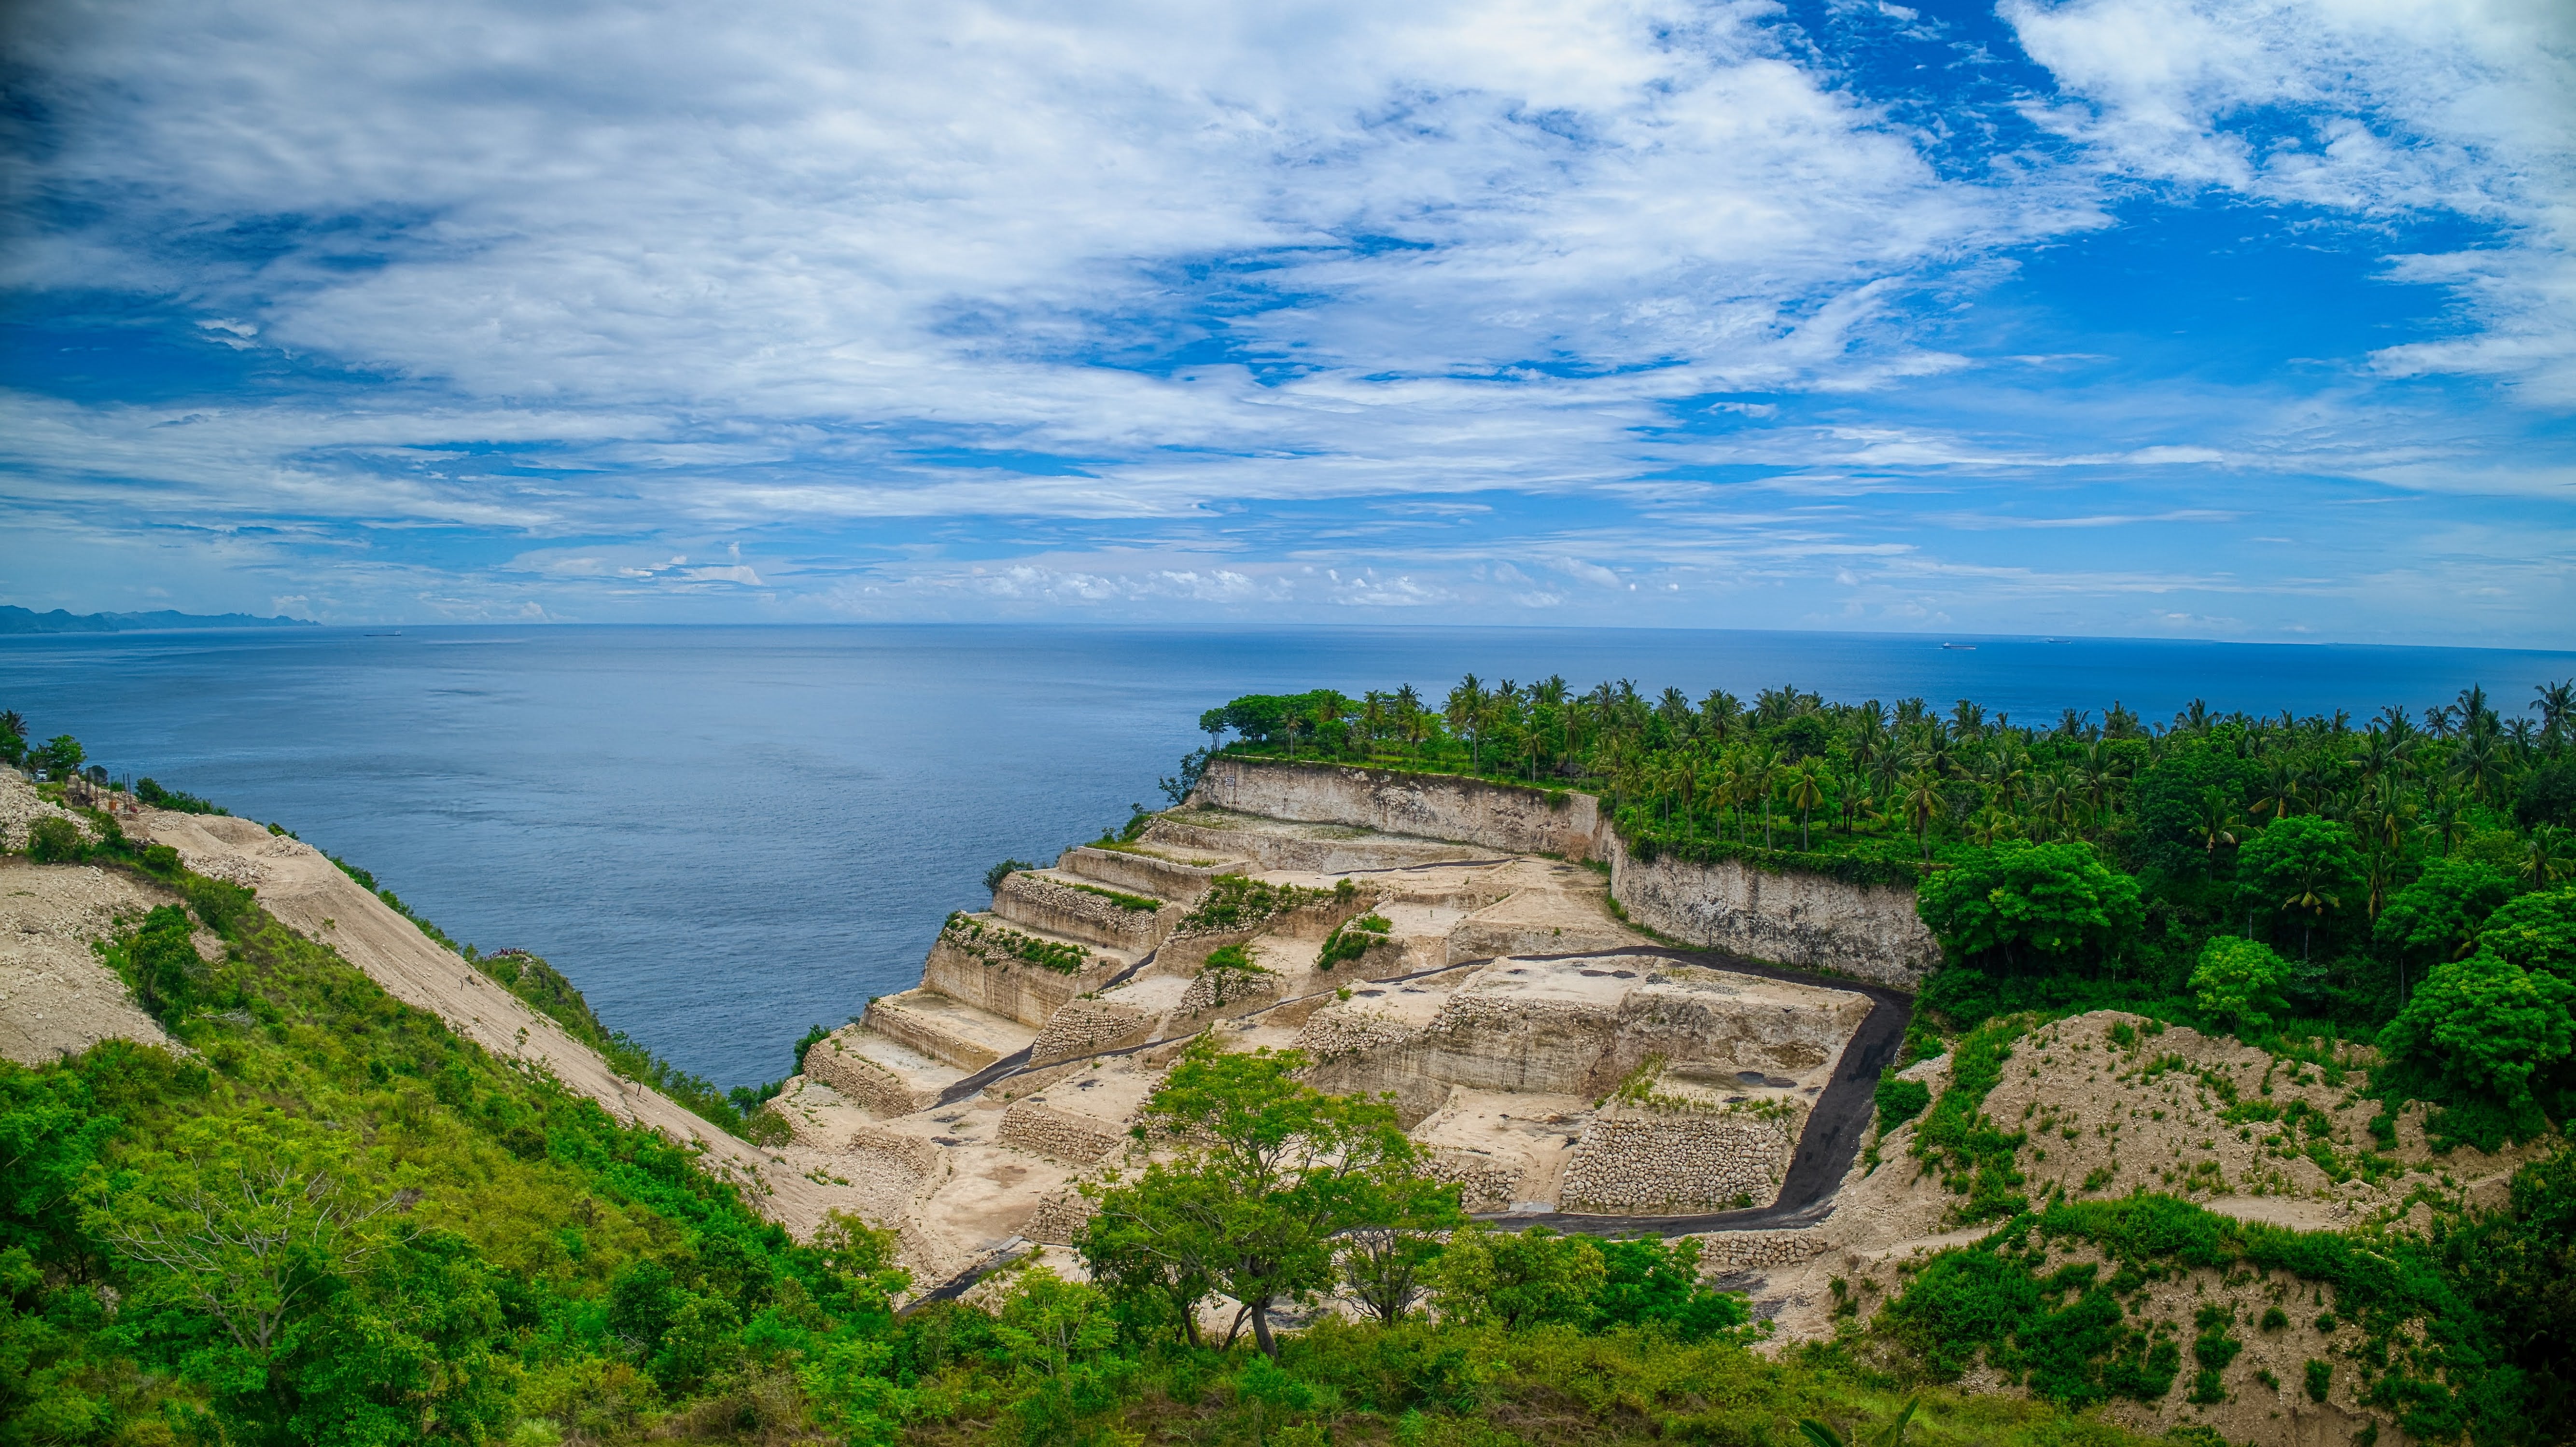 Nusa Penida 매매 토지 Atuh Beach Los Tebing (Cliff)